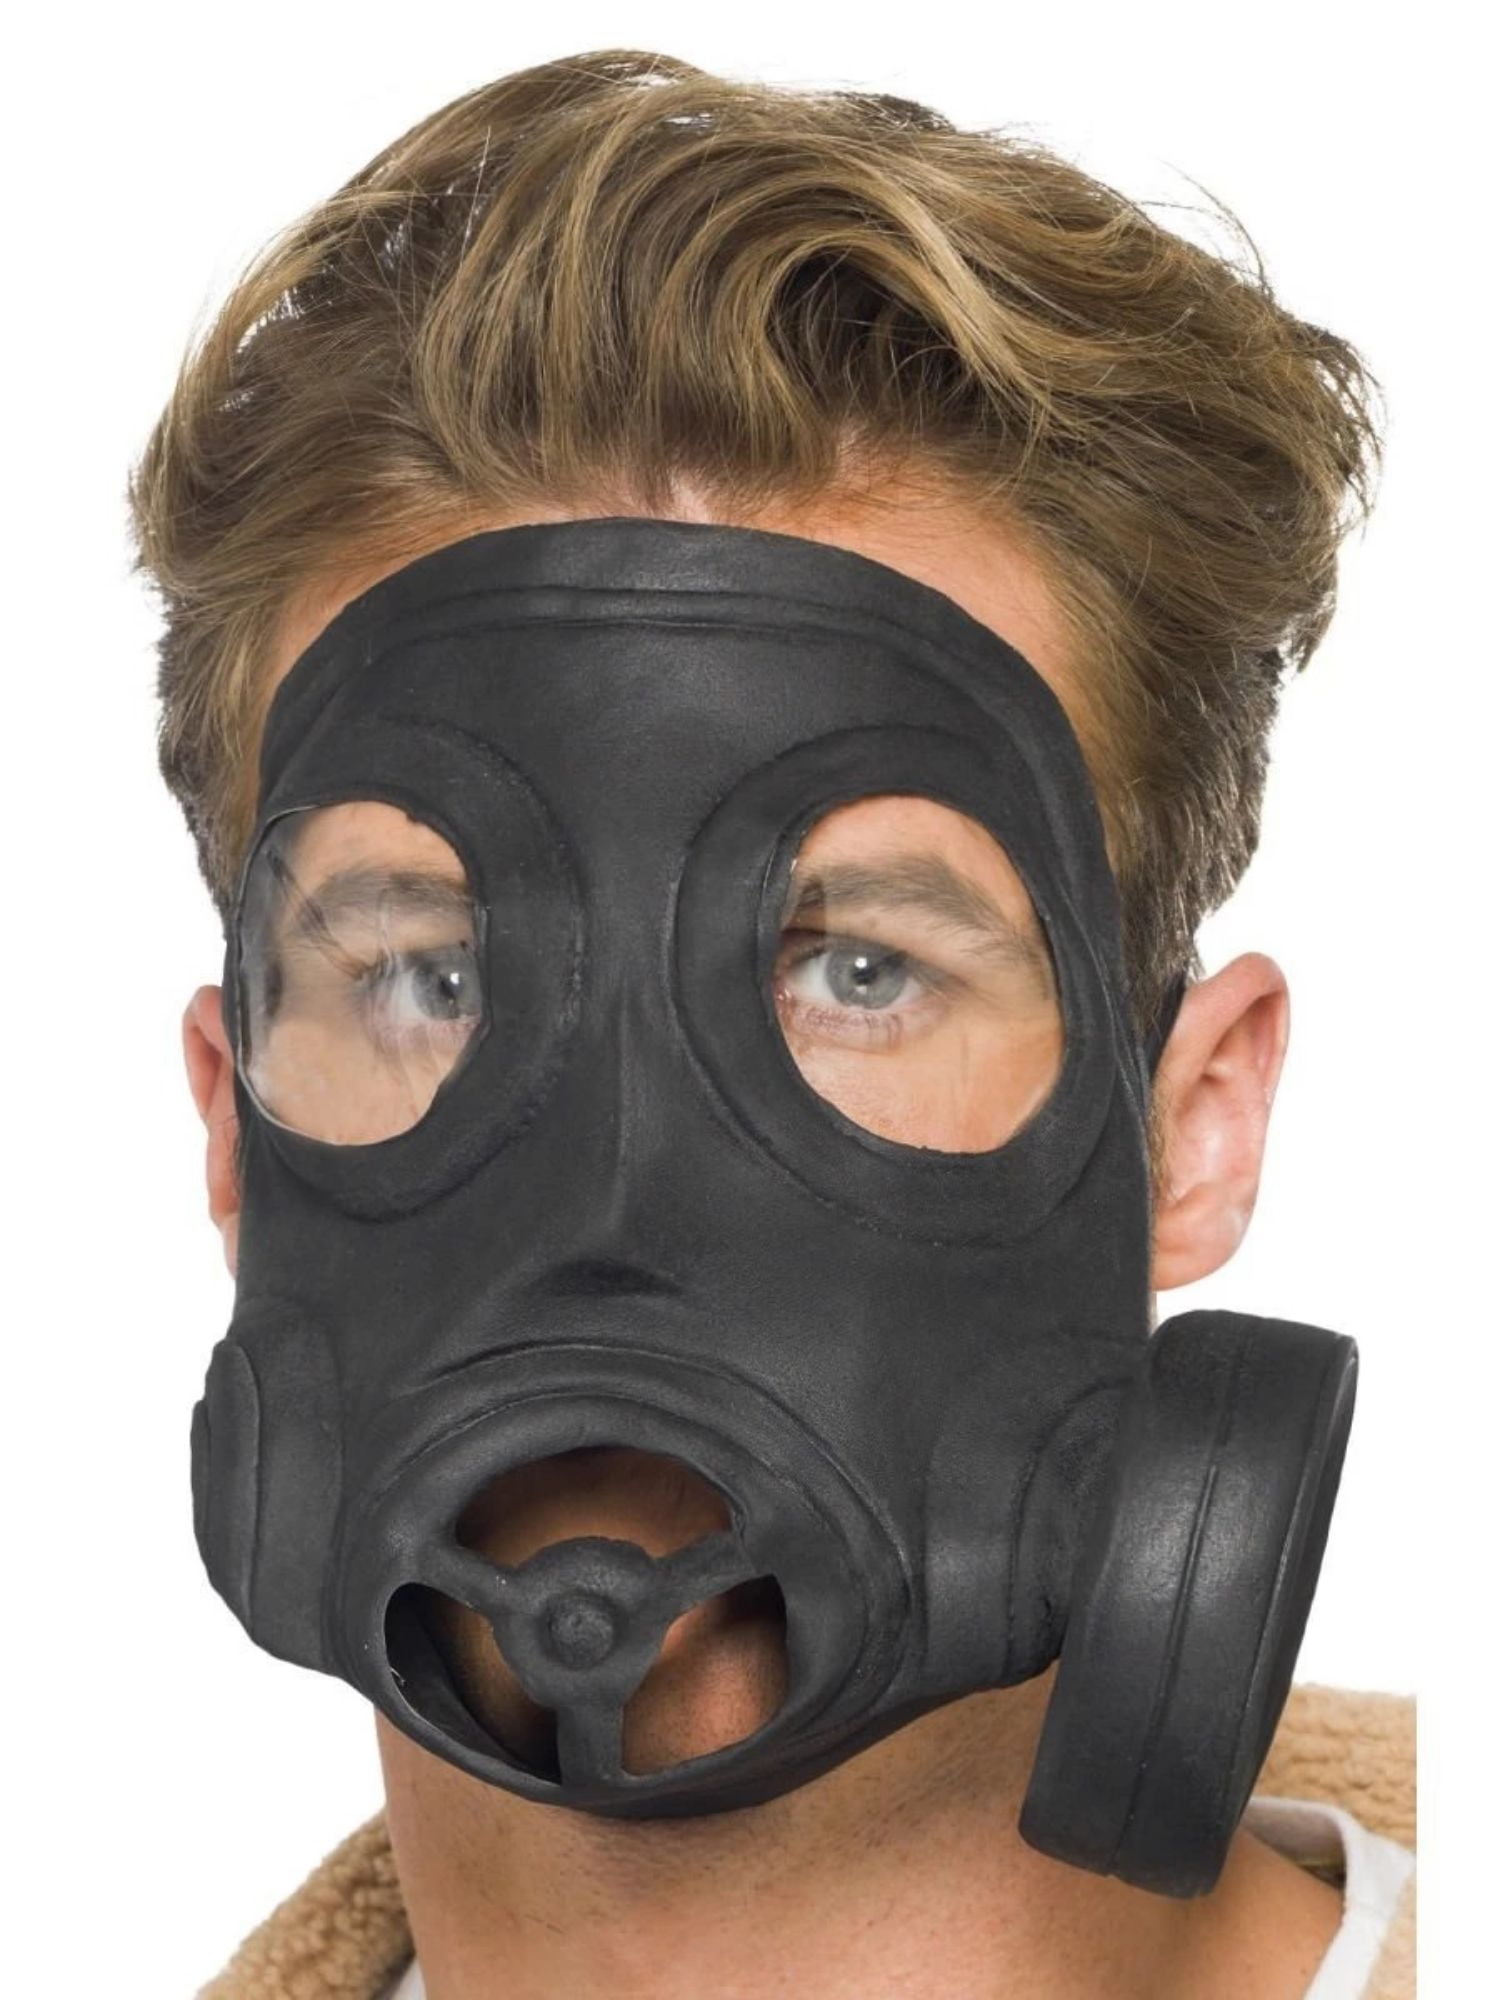 gasmaske gasmask maski smiffys biohazard antigas maschera respirator masken svart rubber oheistuotteet eri shoechic maskit zombie cdon shindigs naamiaisasu stinkyface